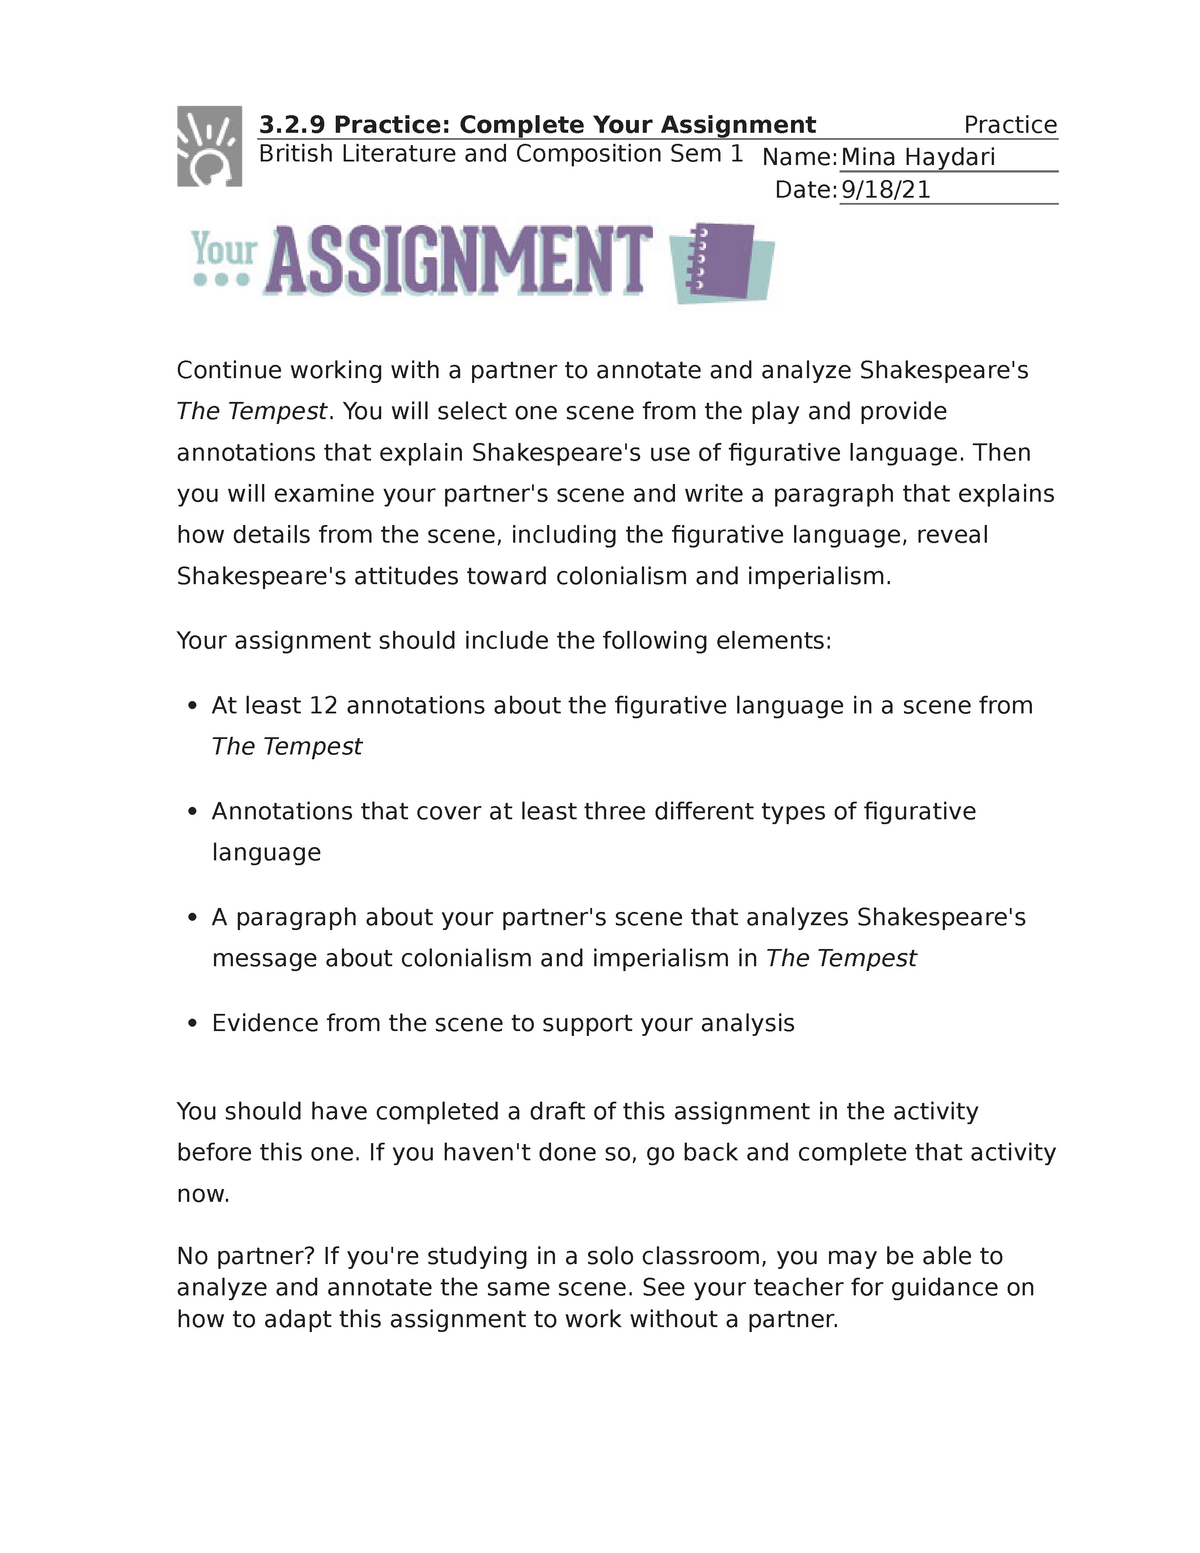 management in practice assignment 3